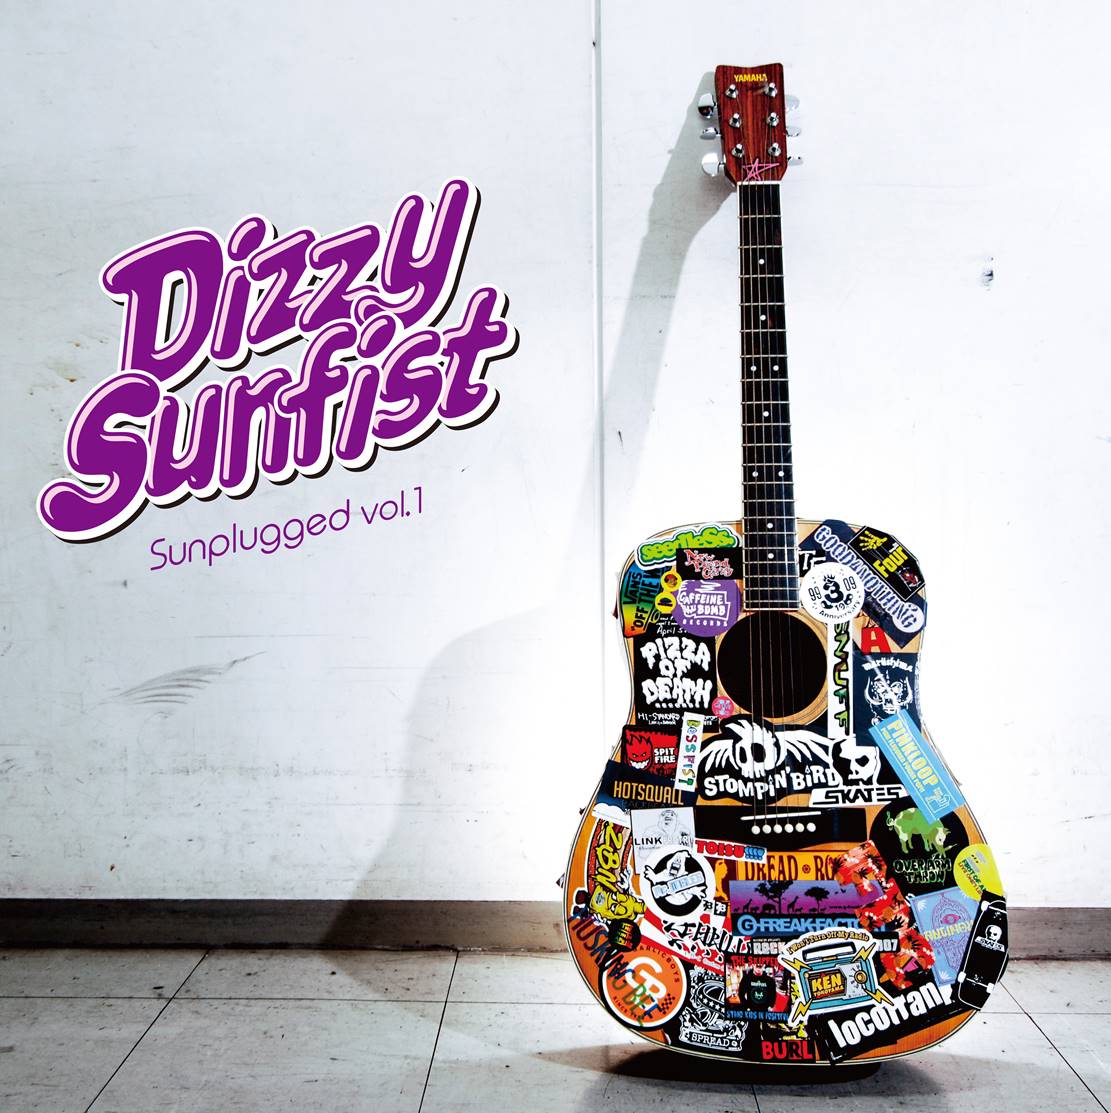 Dizzy Sunfist OFFICIAL WEB SITE : MUSIC